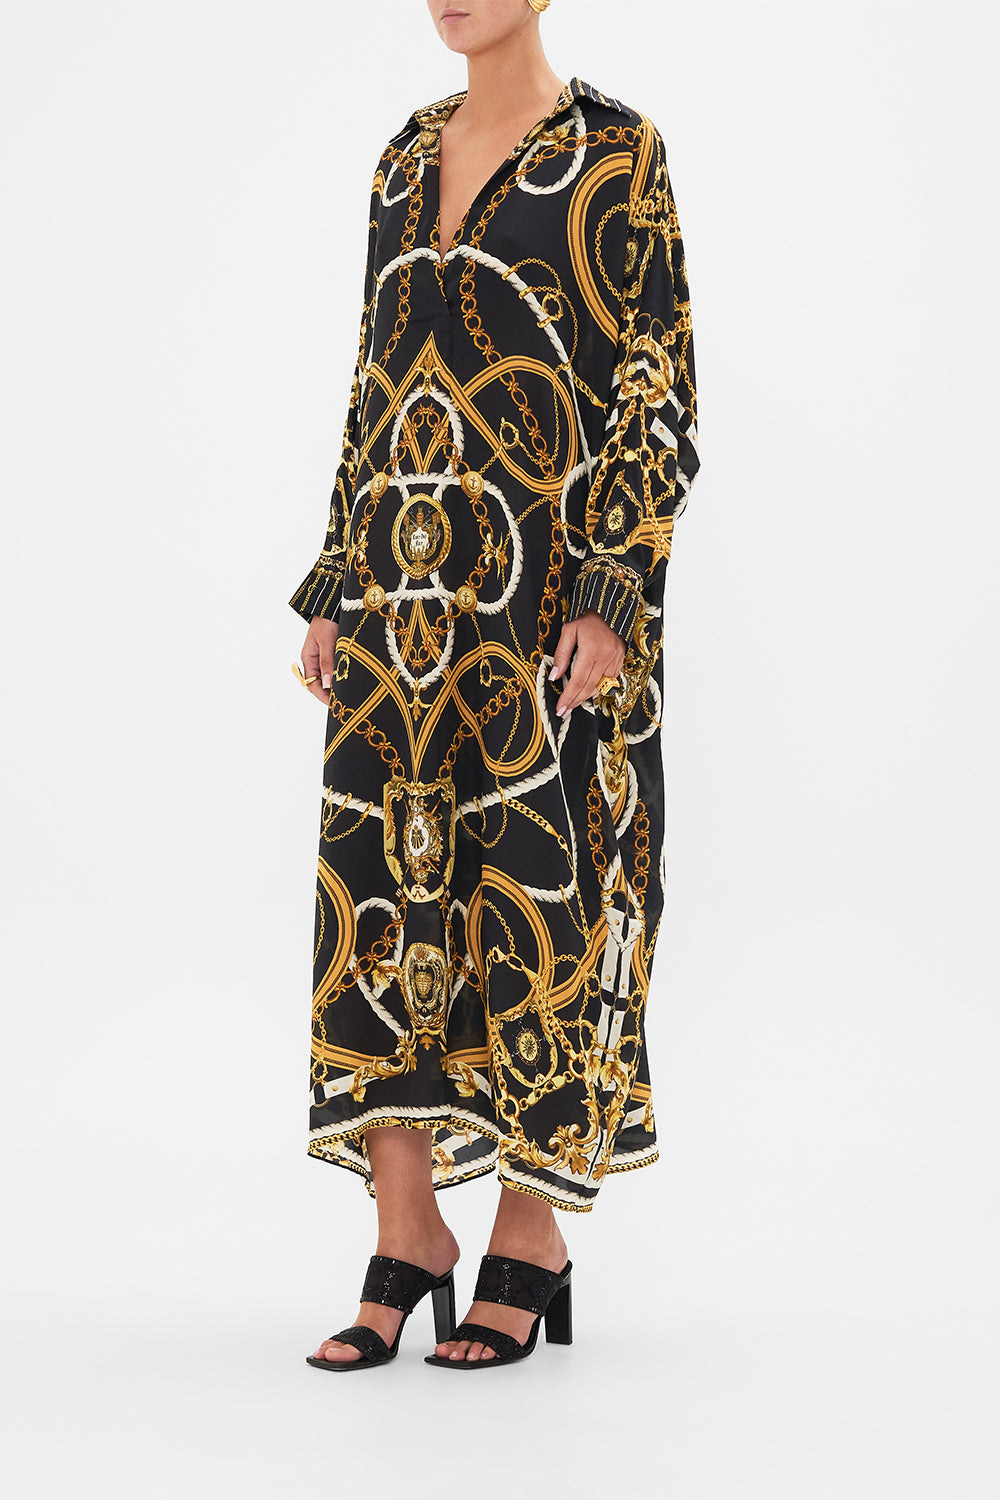 Side view of model wearing CAMILLA silk kaftan in Coast to Coast print